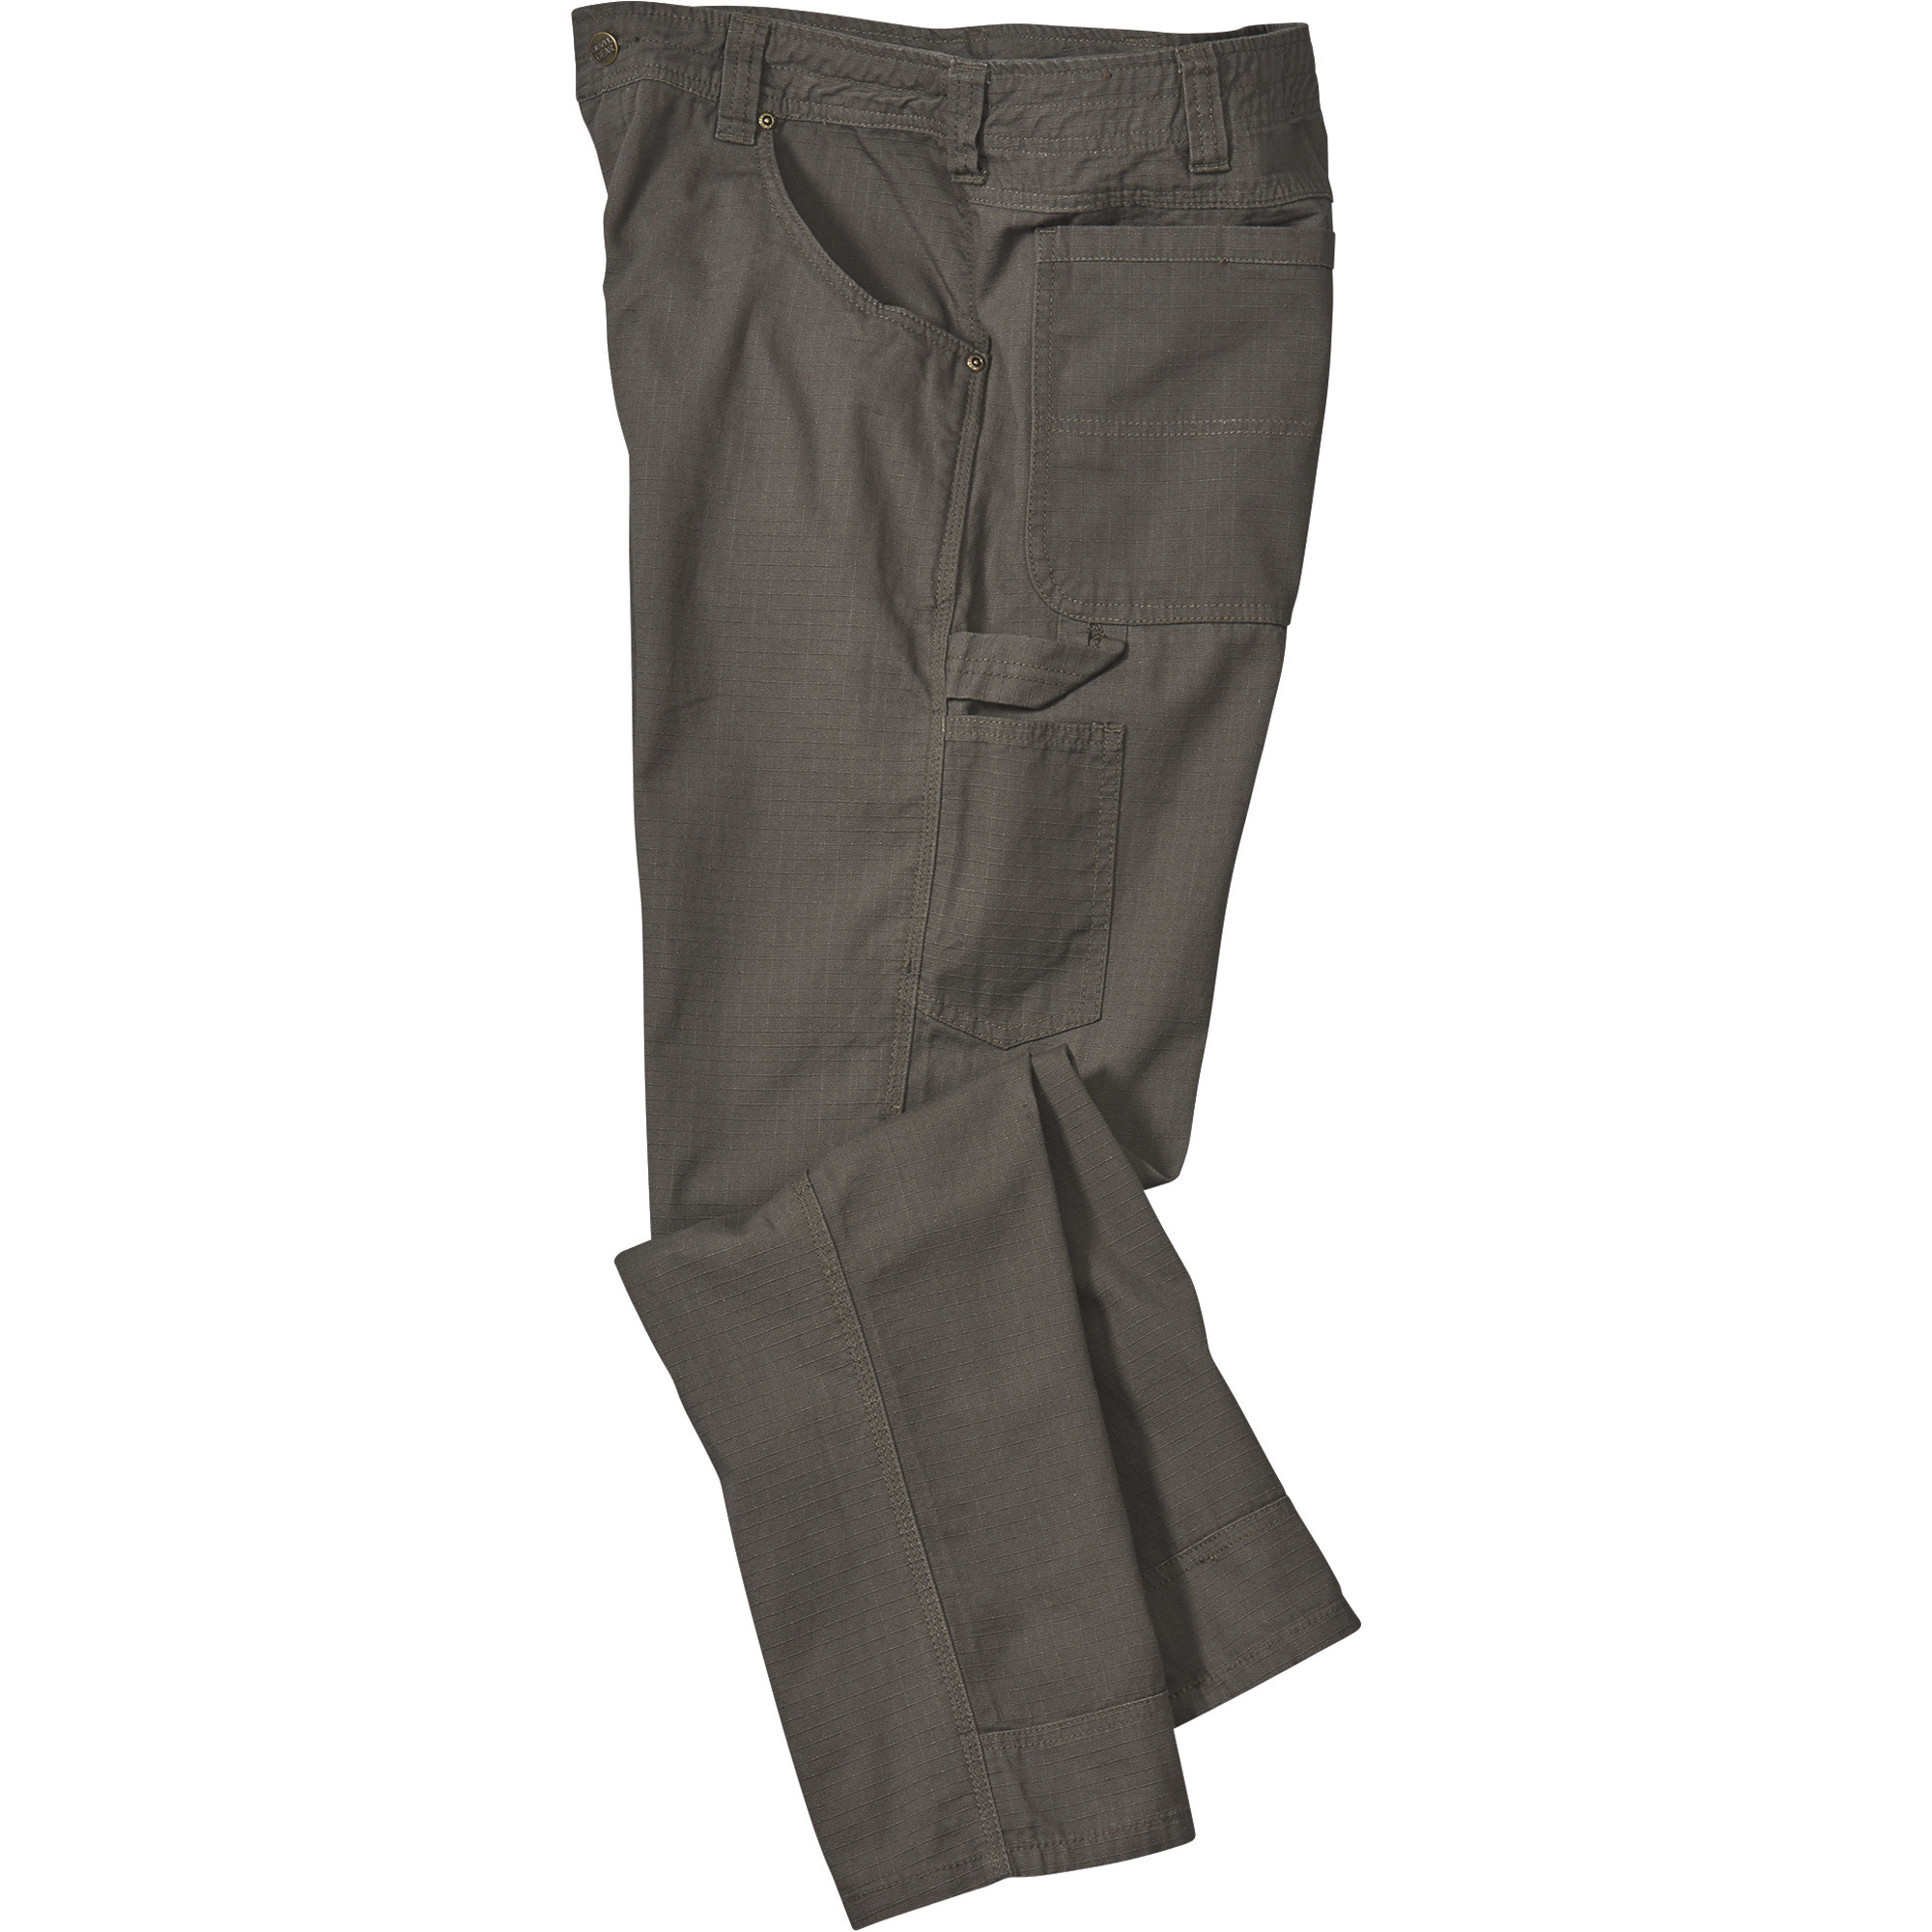 Gravel Gear Men's Cotton Ripstop Carpenter Pants with Teflon Fabric Protector â Moss, 40Inch Waist x 32Inch Inseam